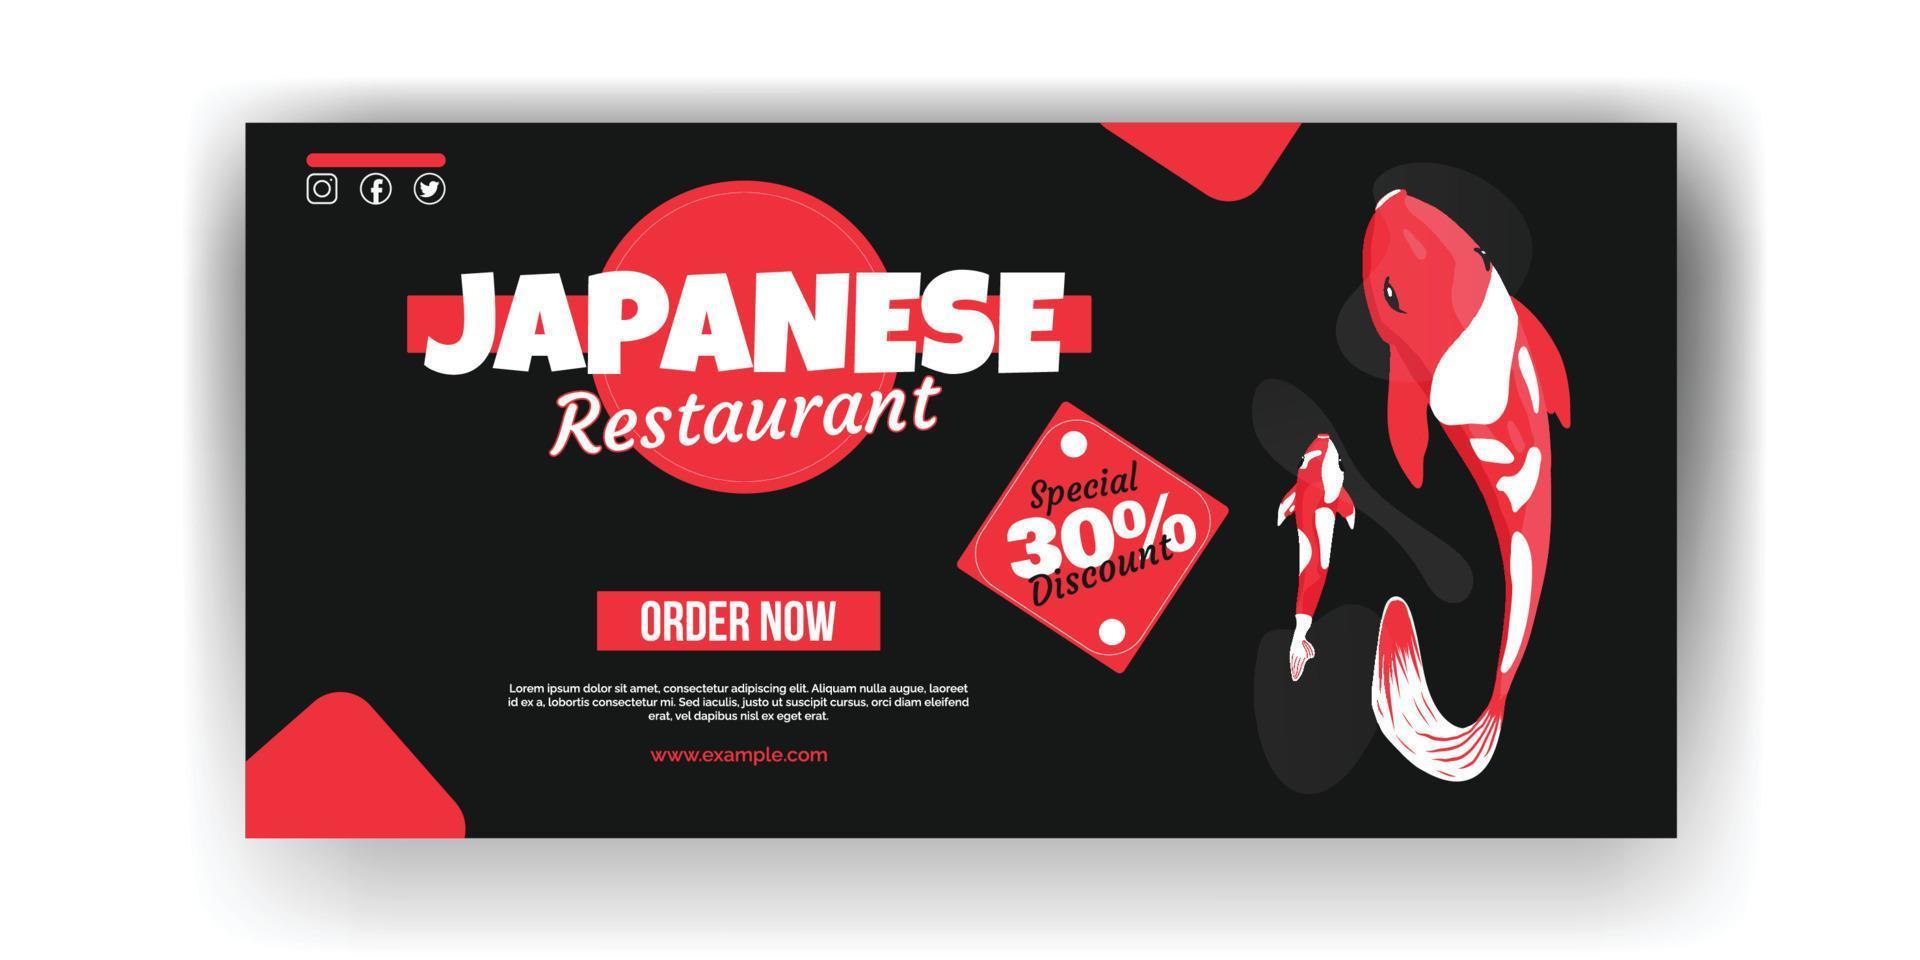 Asianfood japanese restaurant specialday offer banner template vector